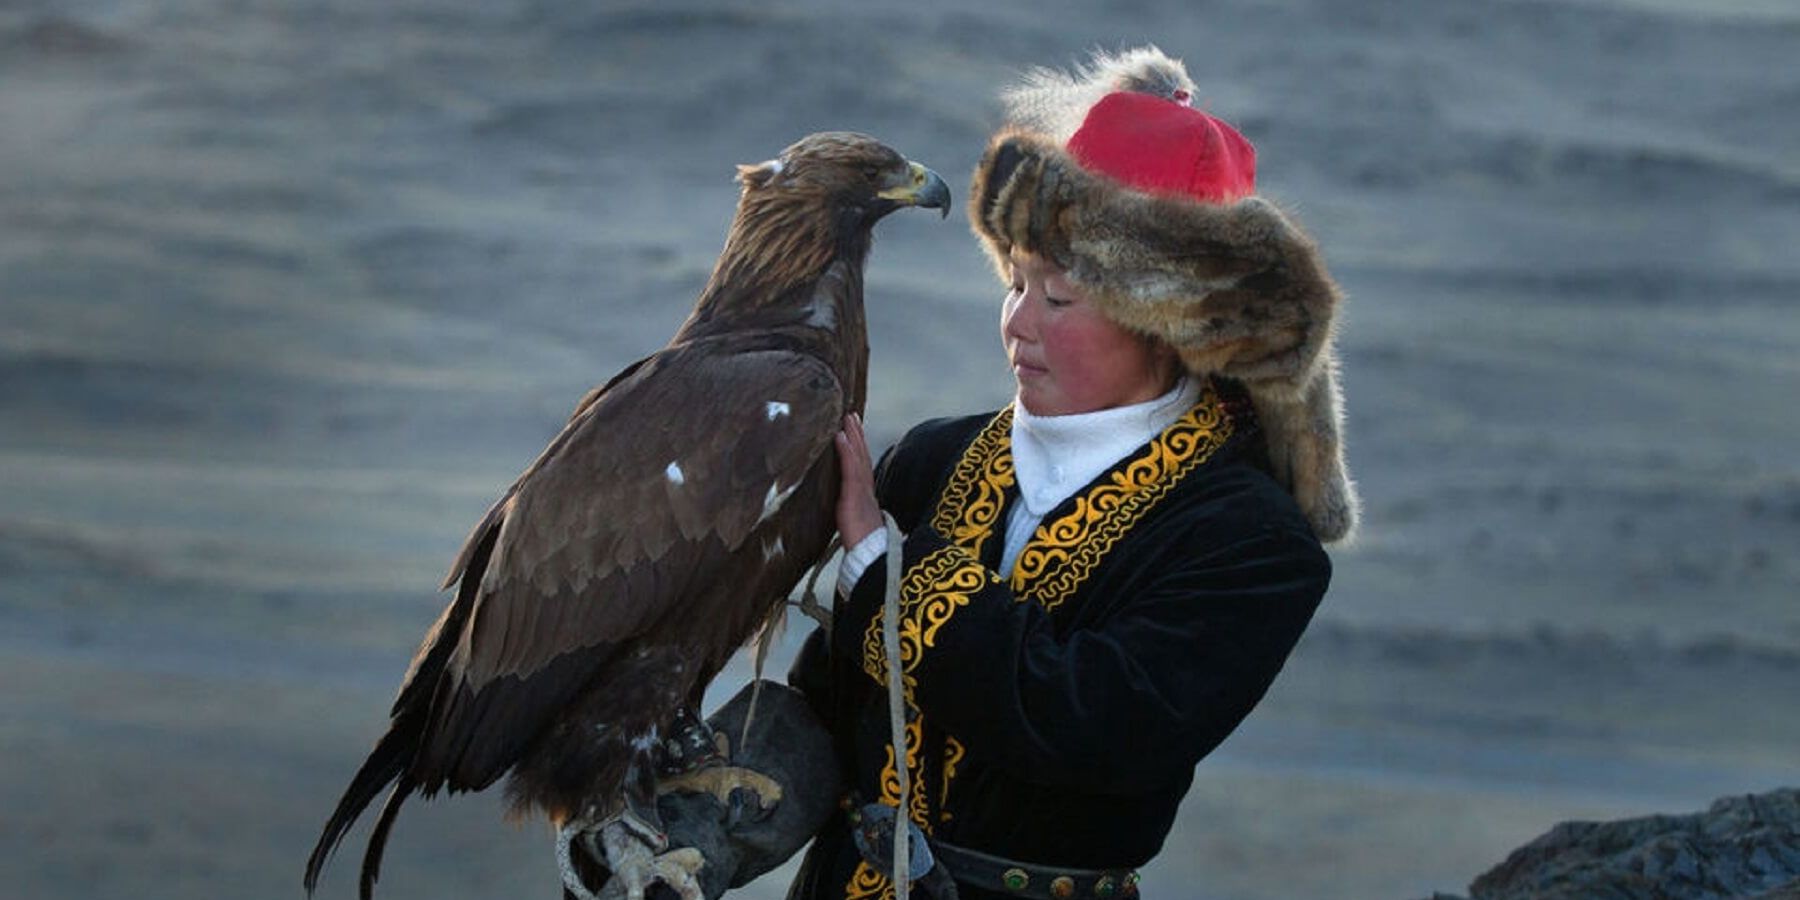 eagle held by woman in fur hat